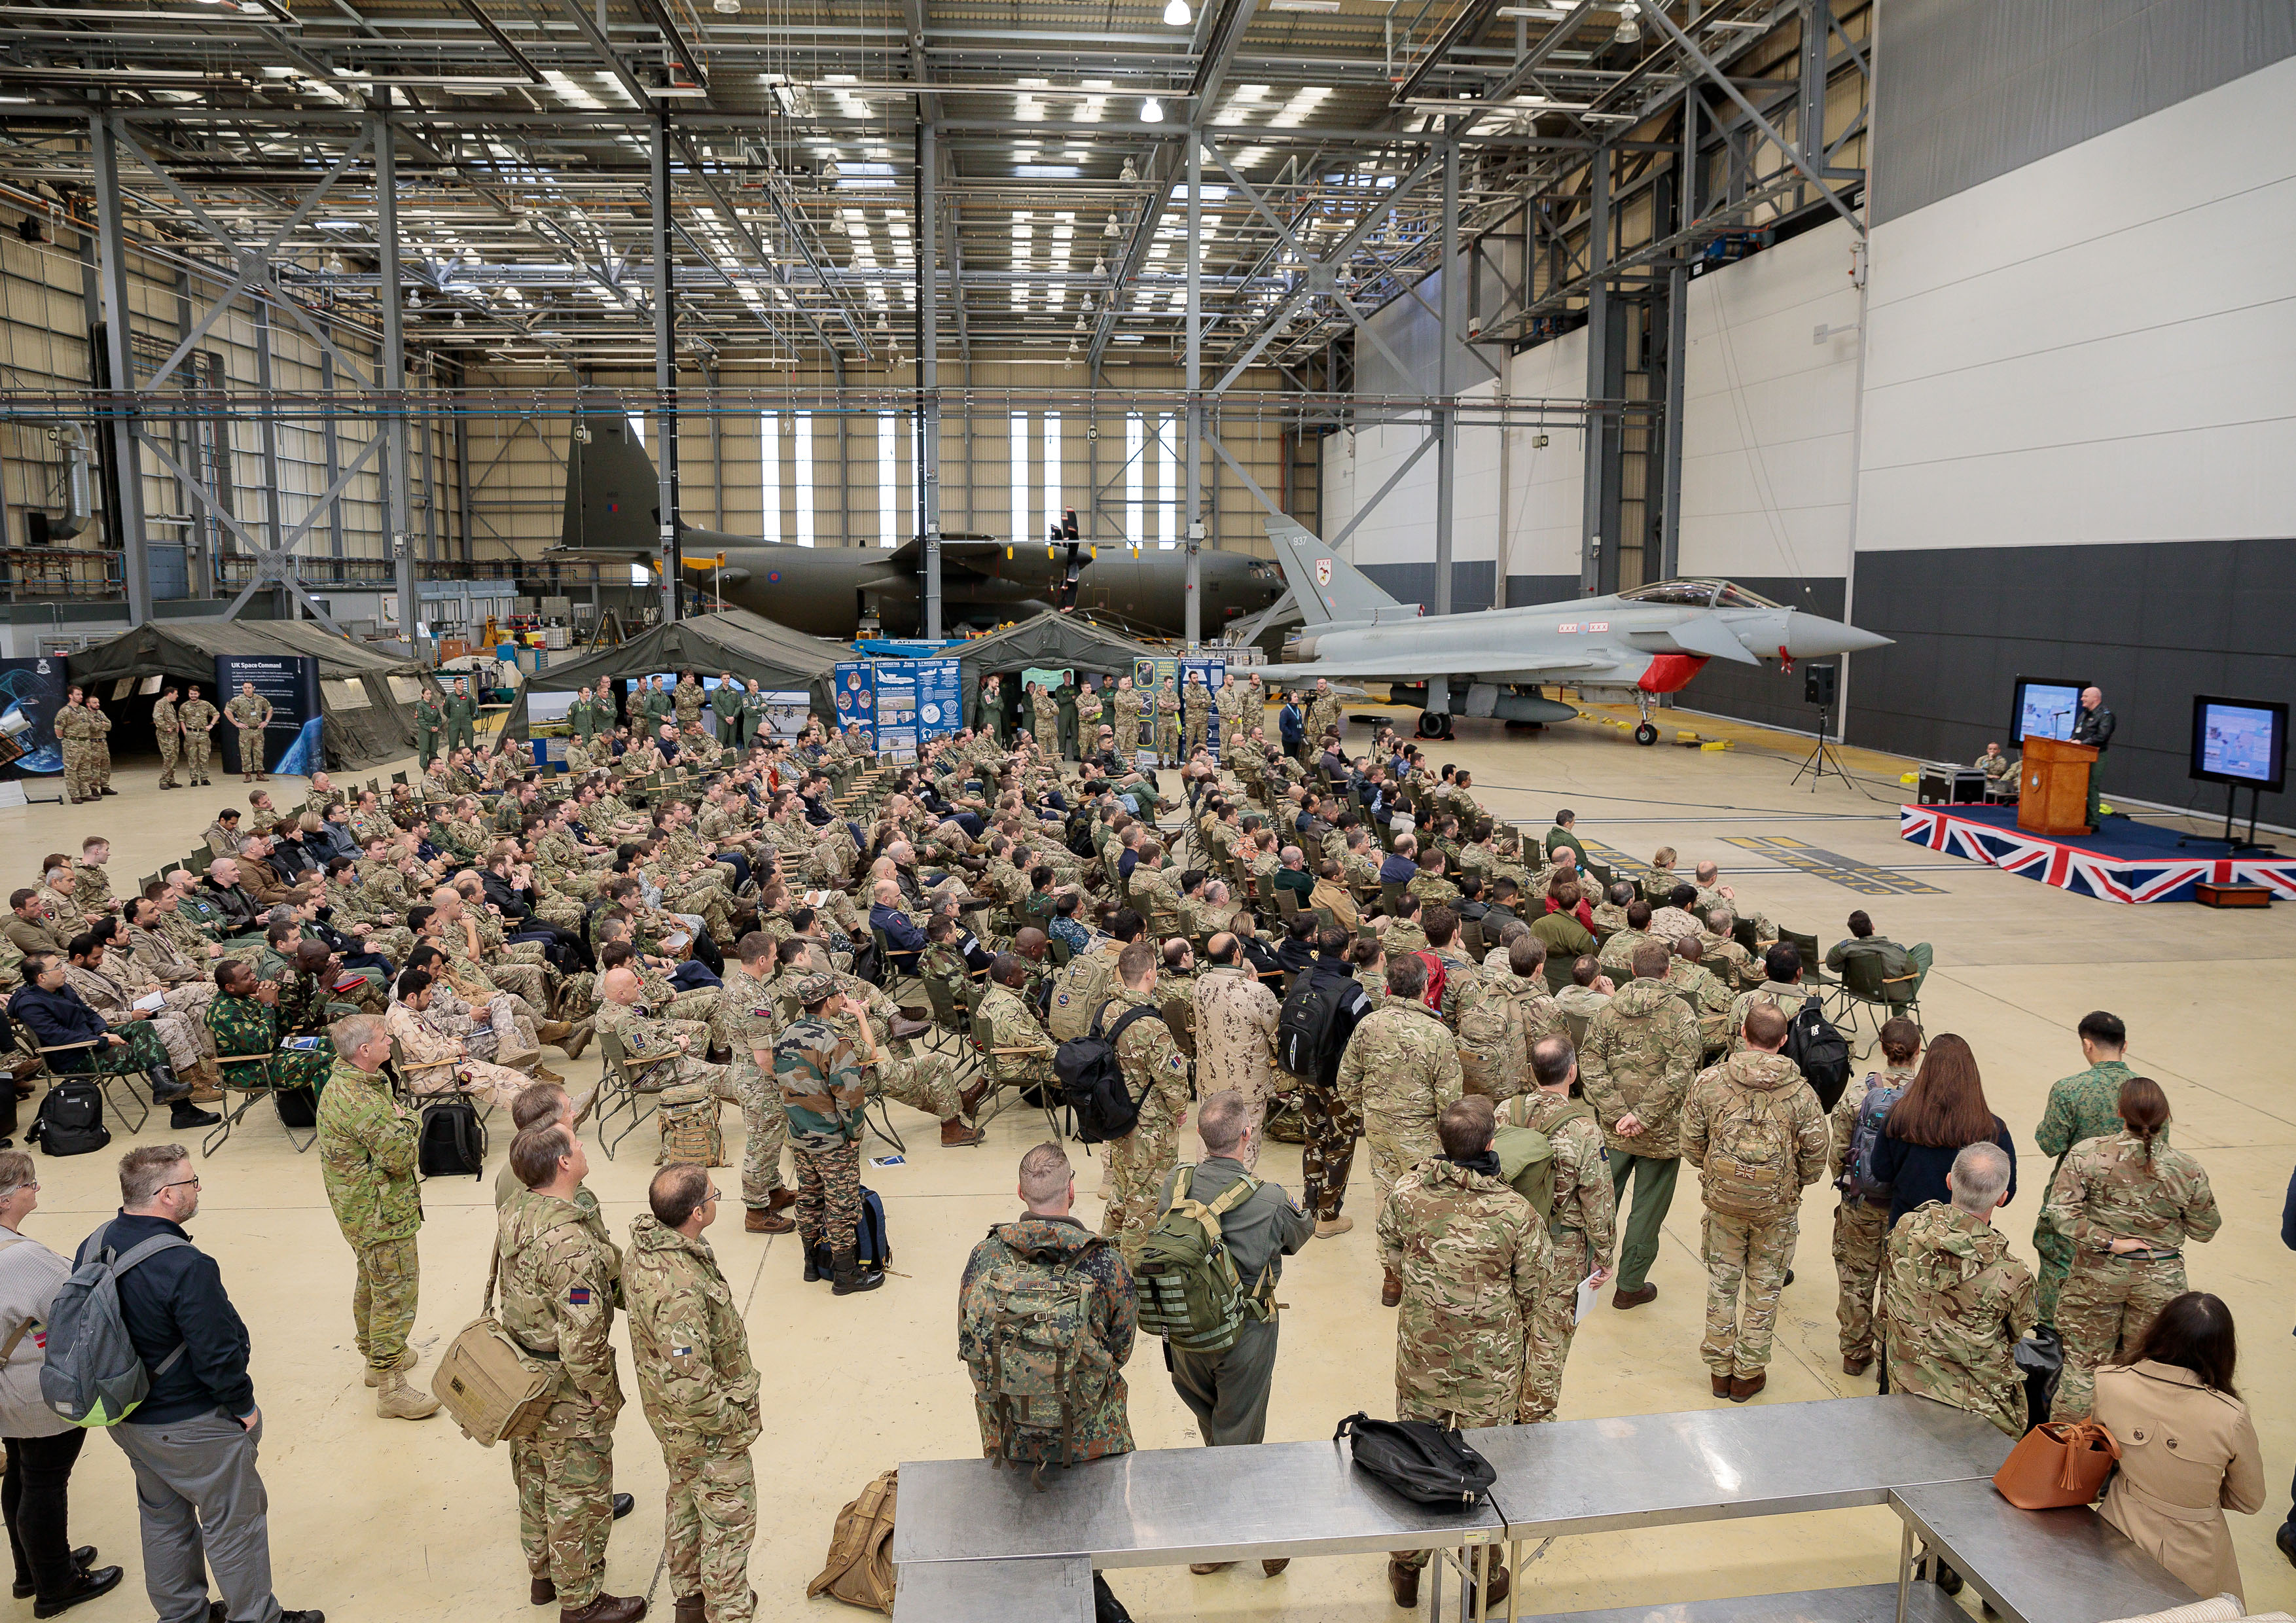 Image shows RAF aviators inside a hangar with stationary aircraft.